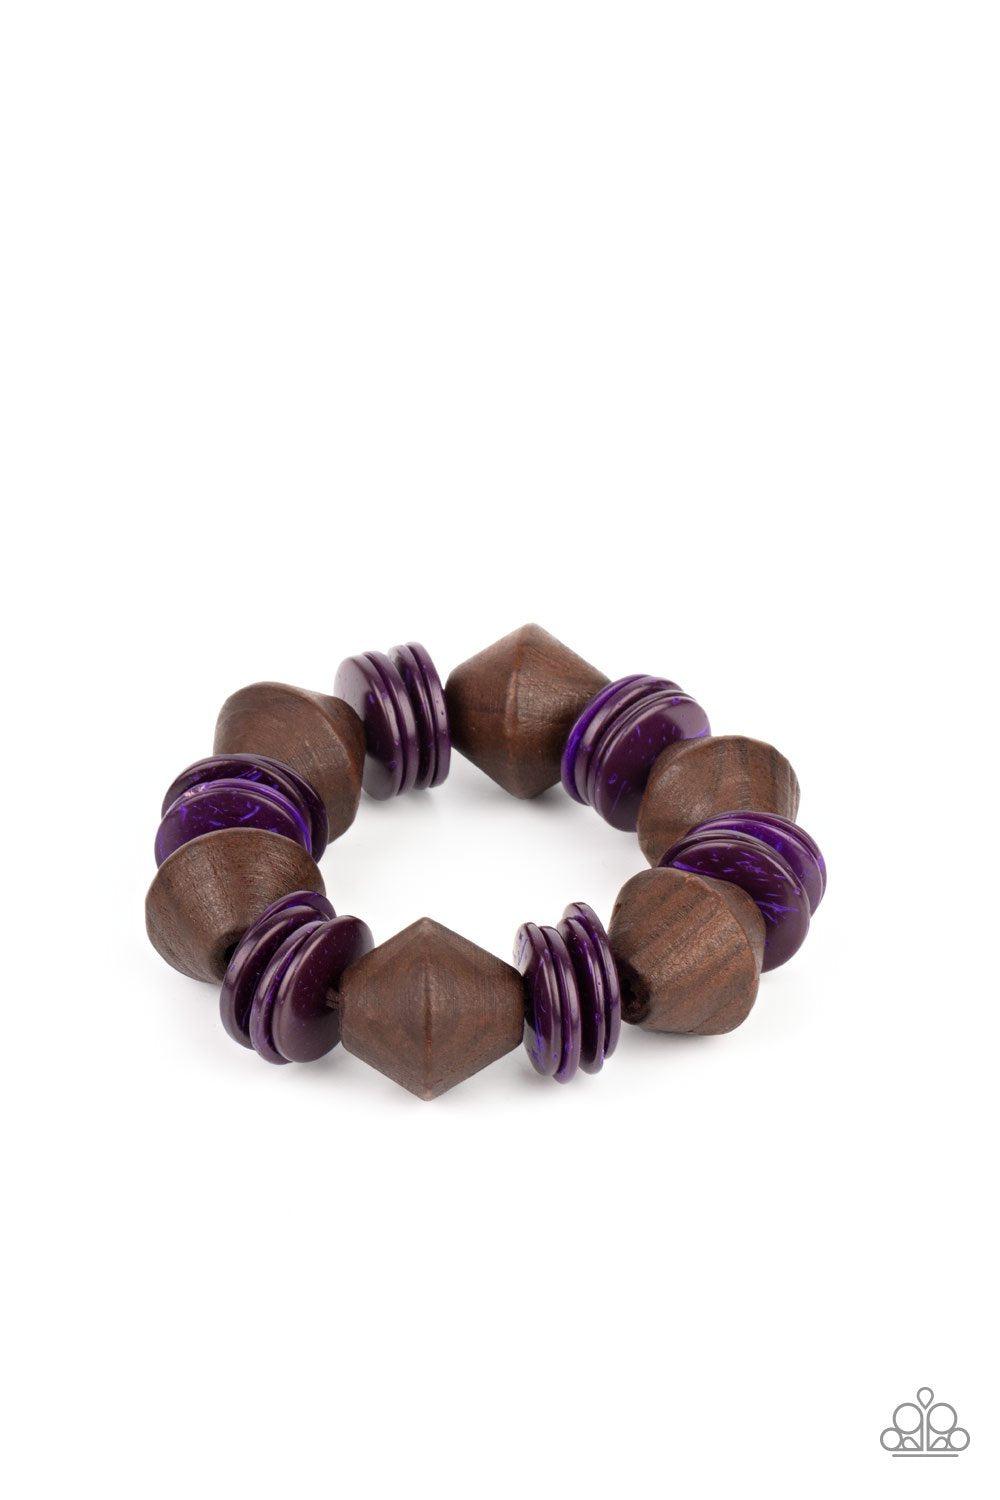 Bermuda Boardwalk Purple and Brown Wood Bracelet - Paparazzi Accessories- lightbox - CarasShop.com - $5 Jewelry by Cara Jewels